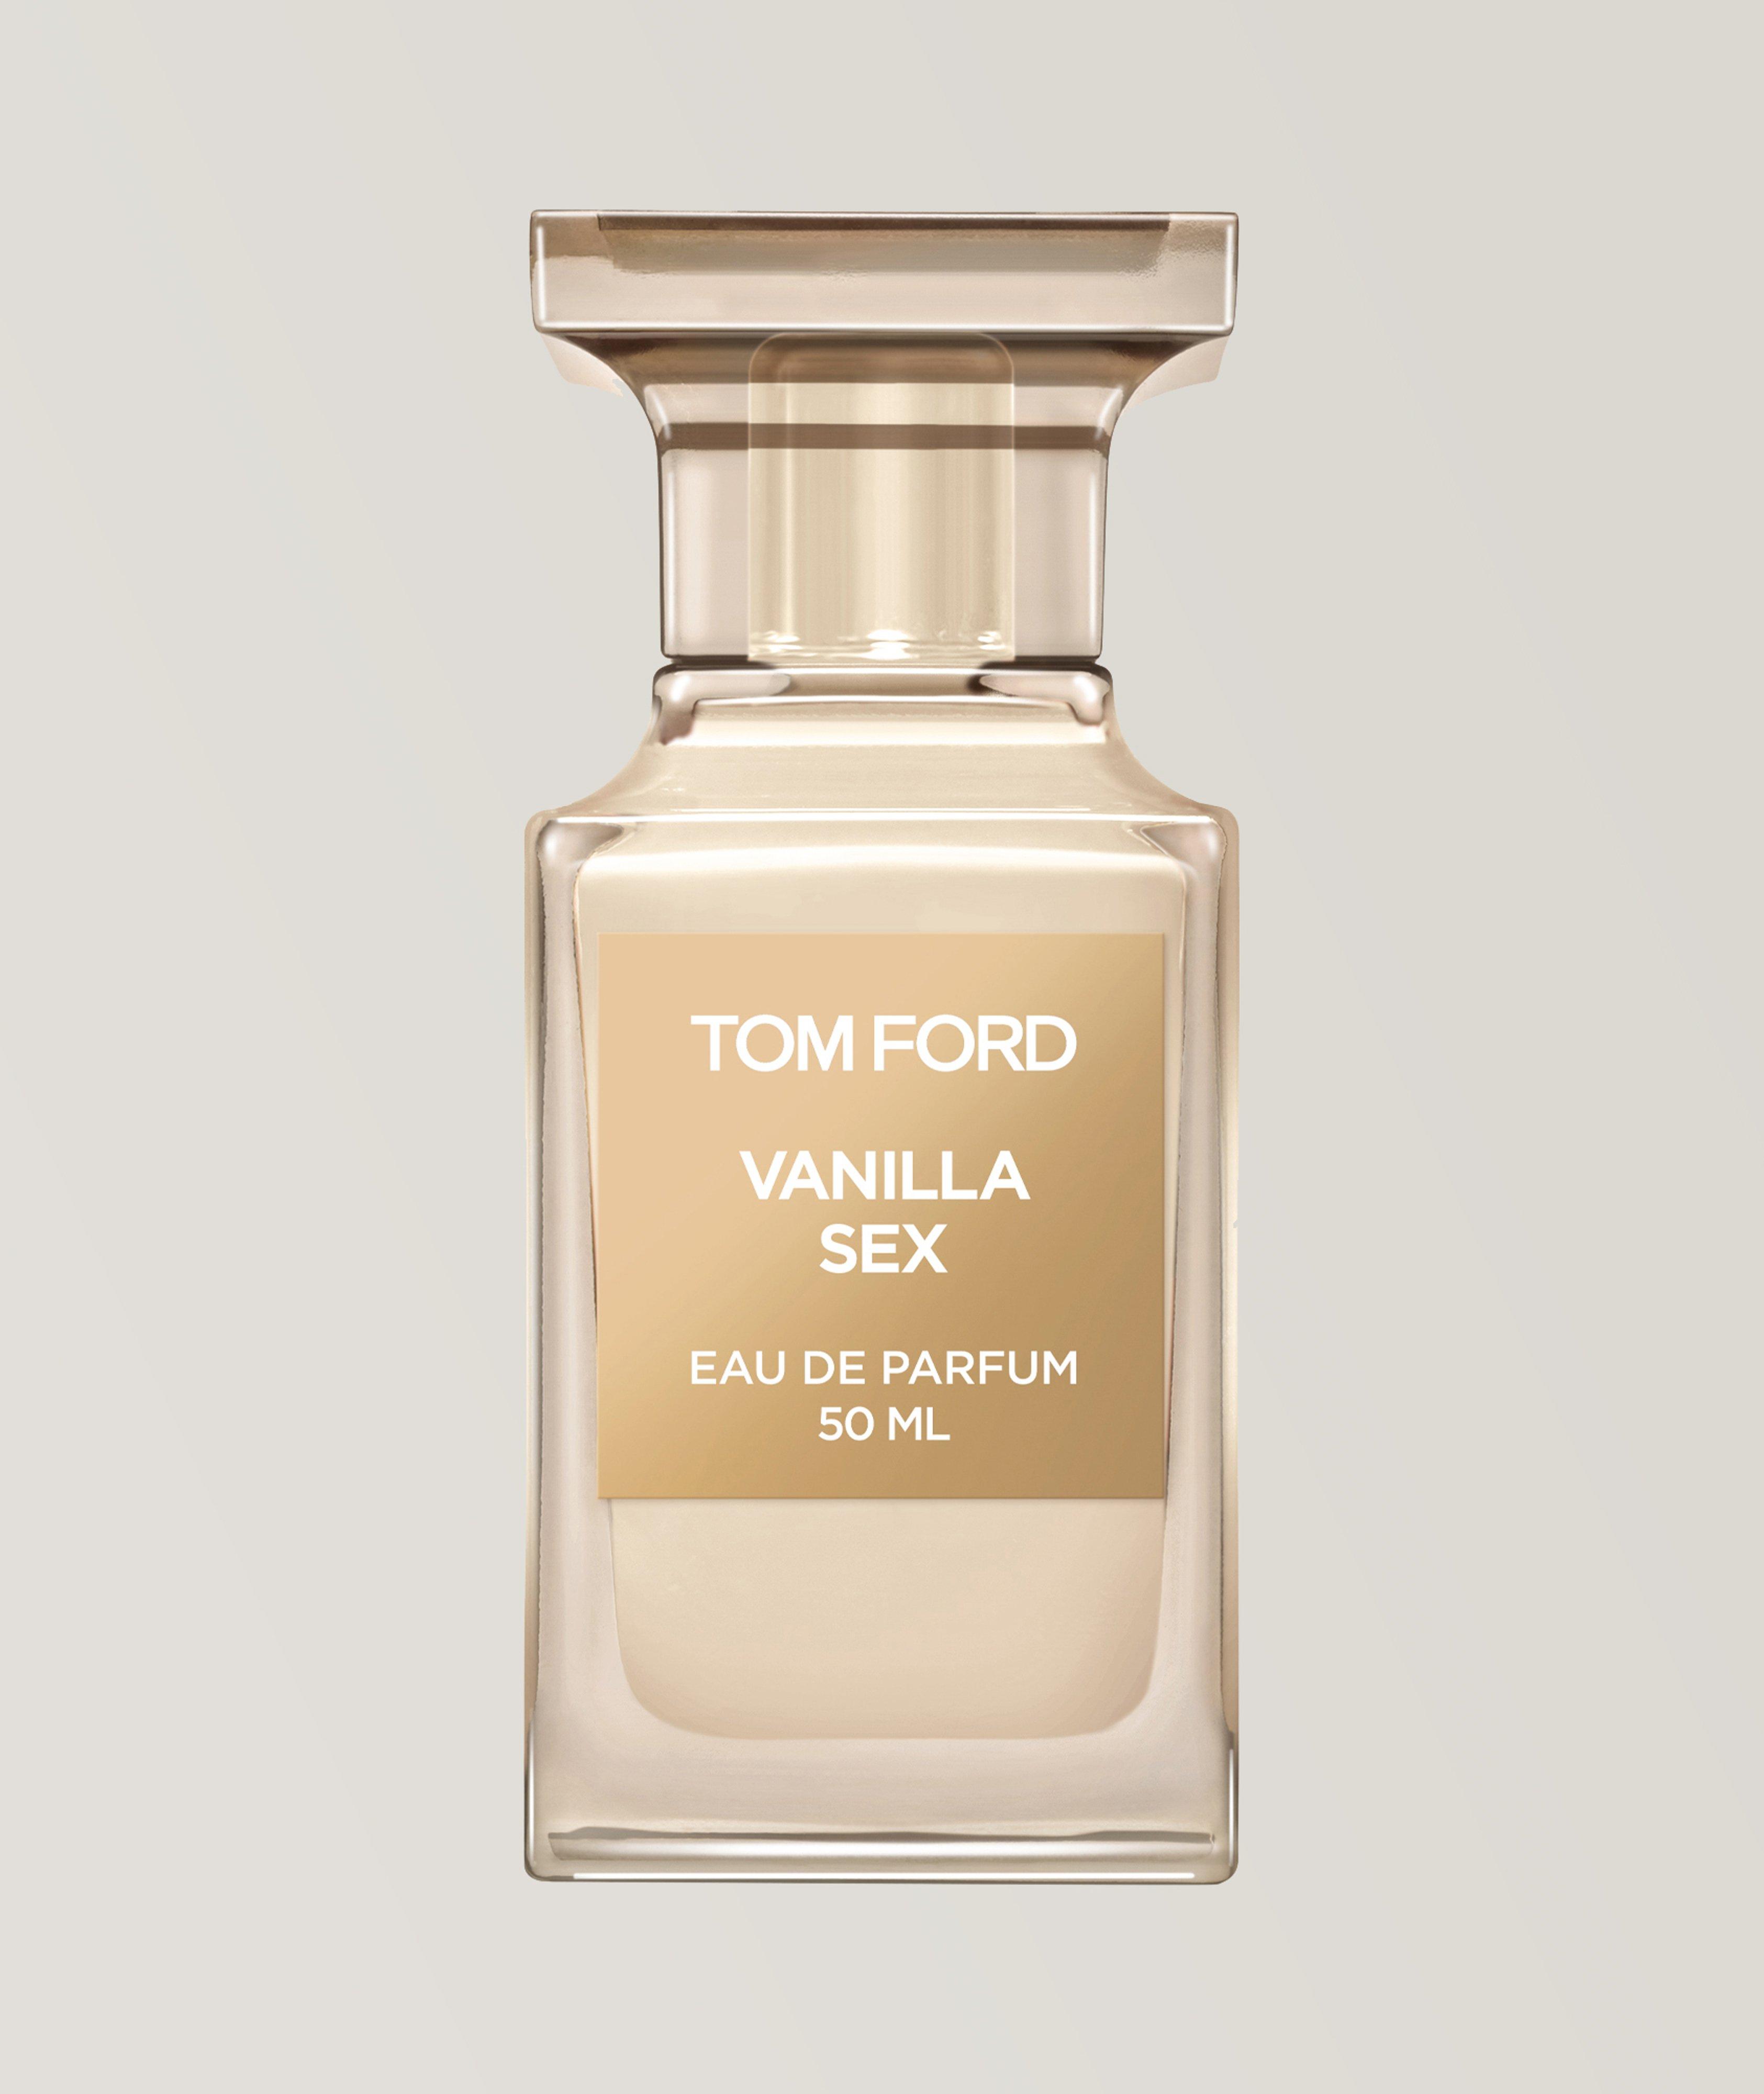 TOM FORD Eau de parfum Vanilla Sex (50 ml)